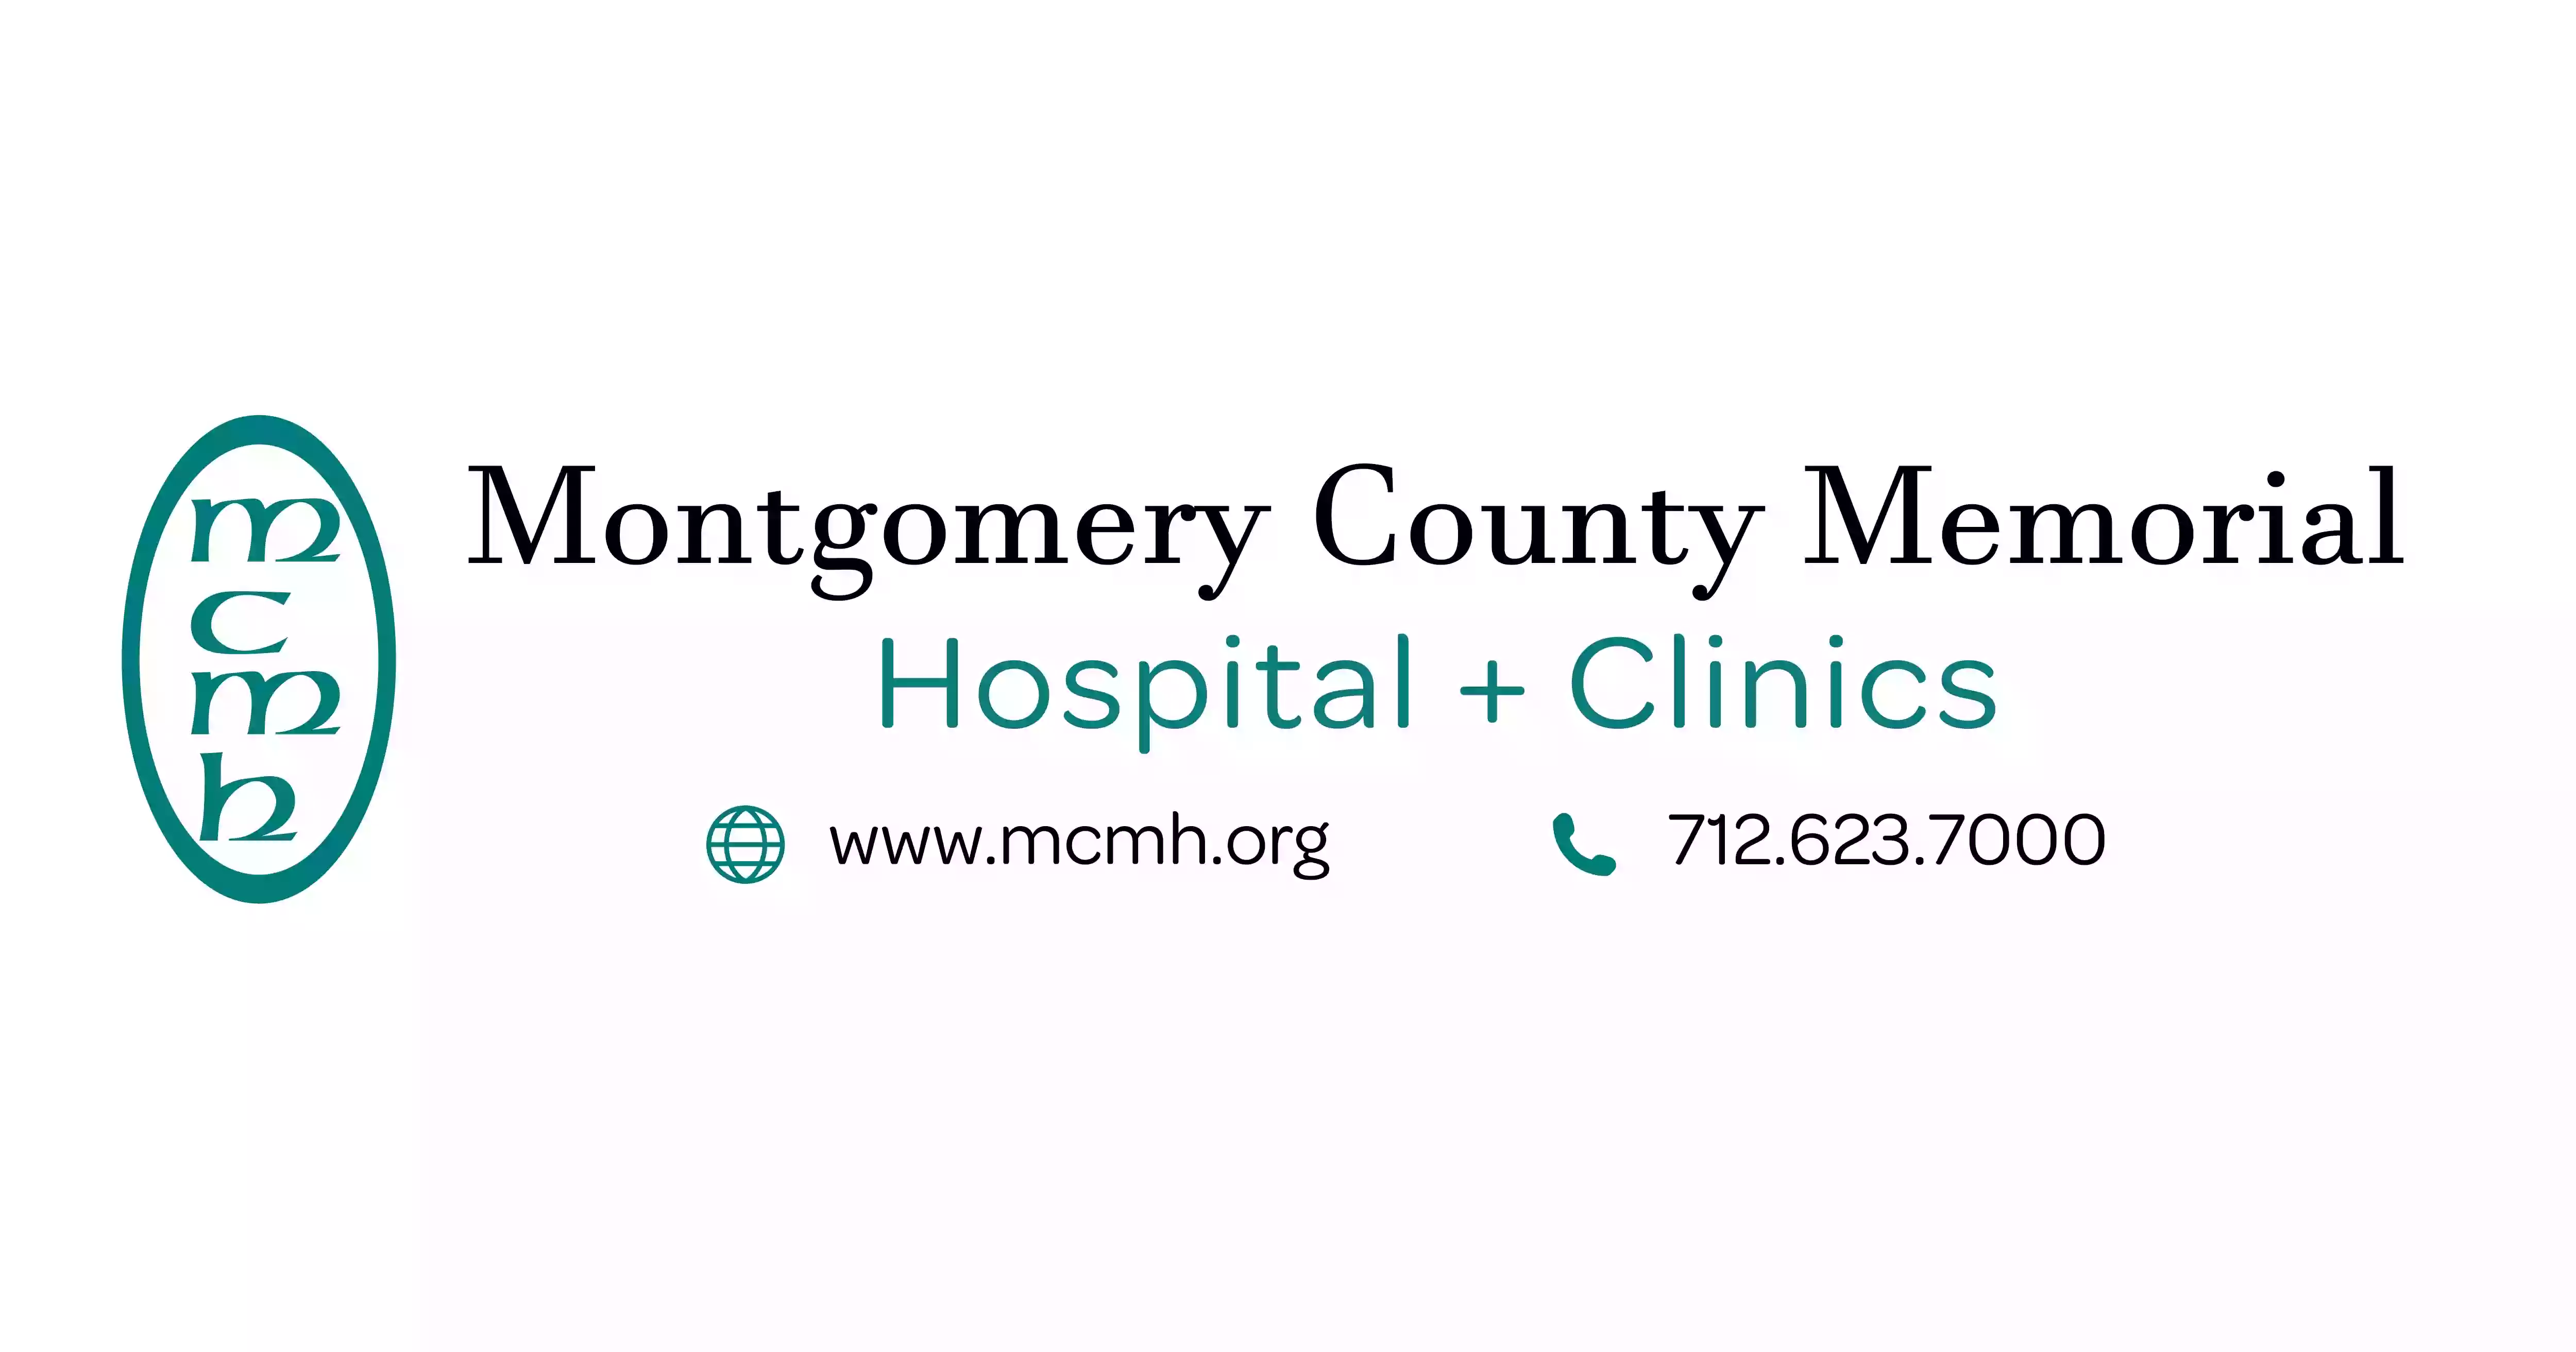 Montgomery County Memorial Hospital + Clinics